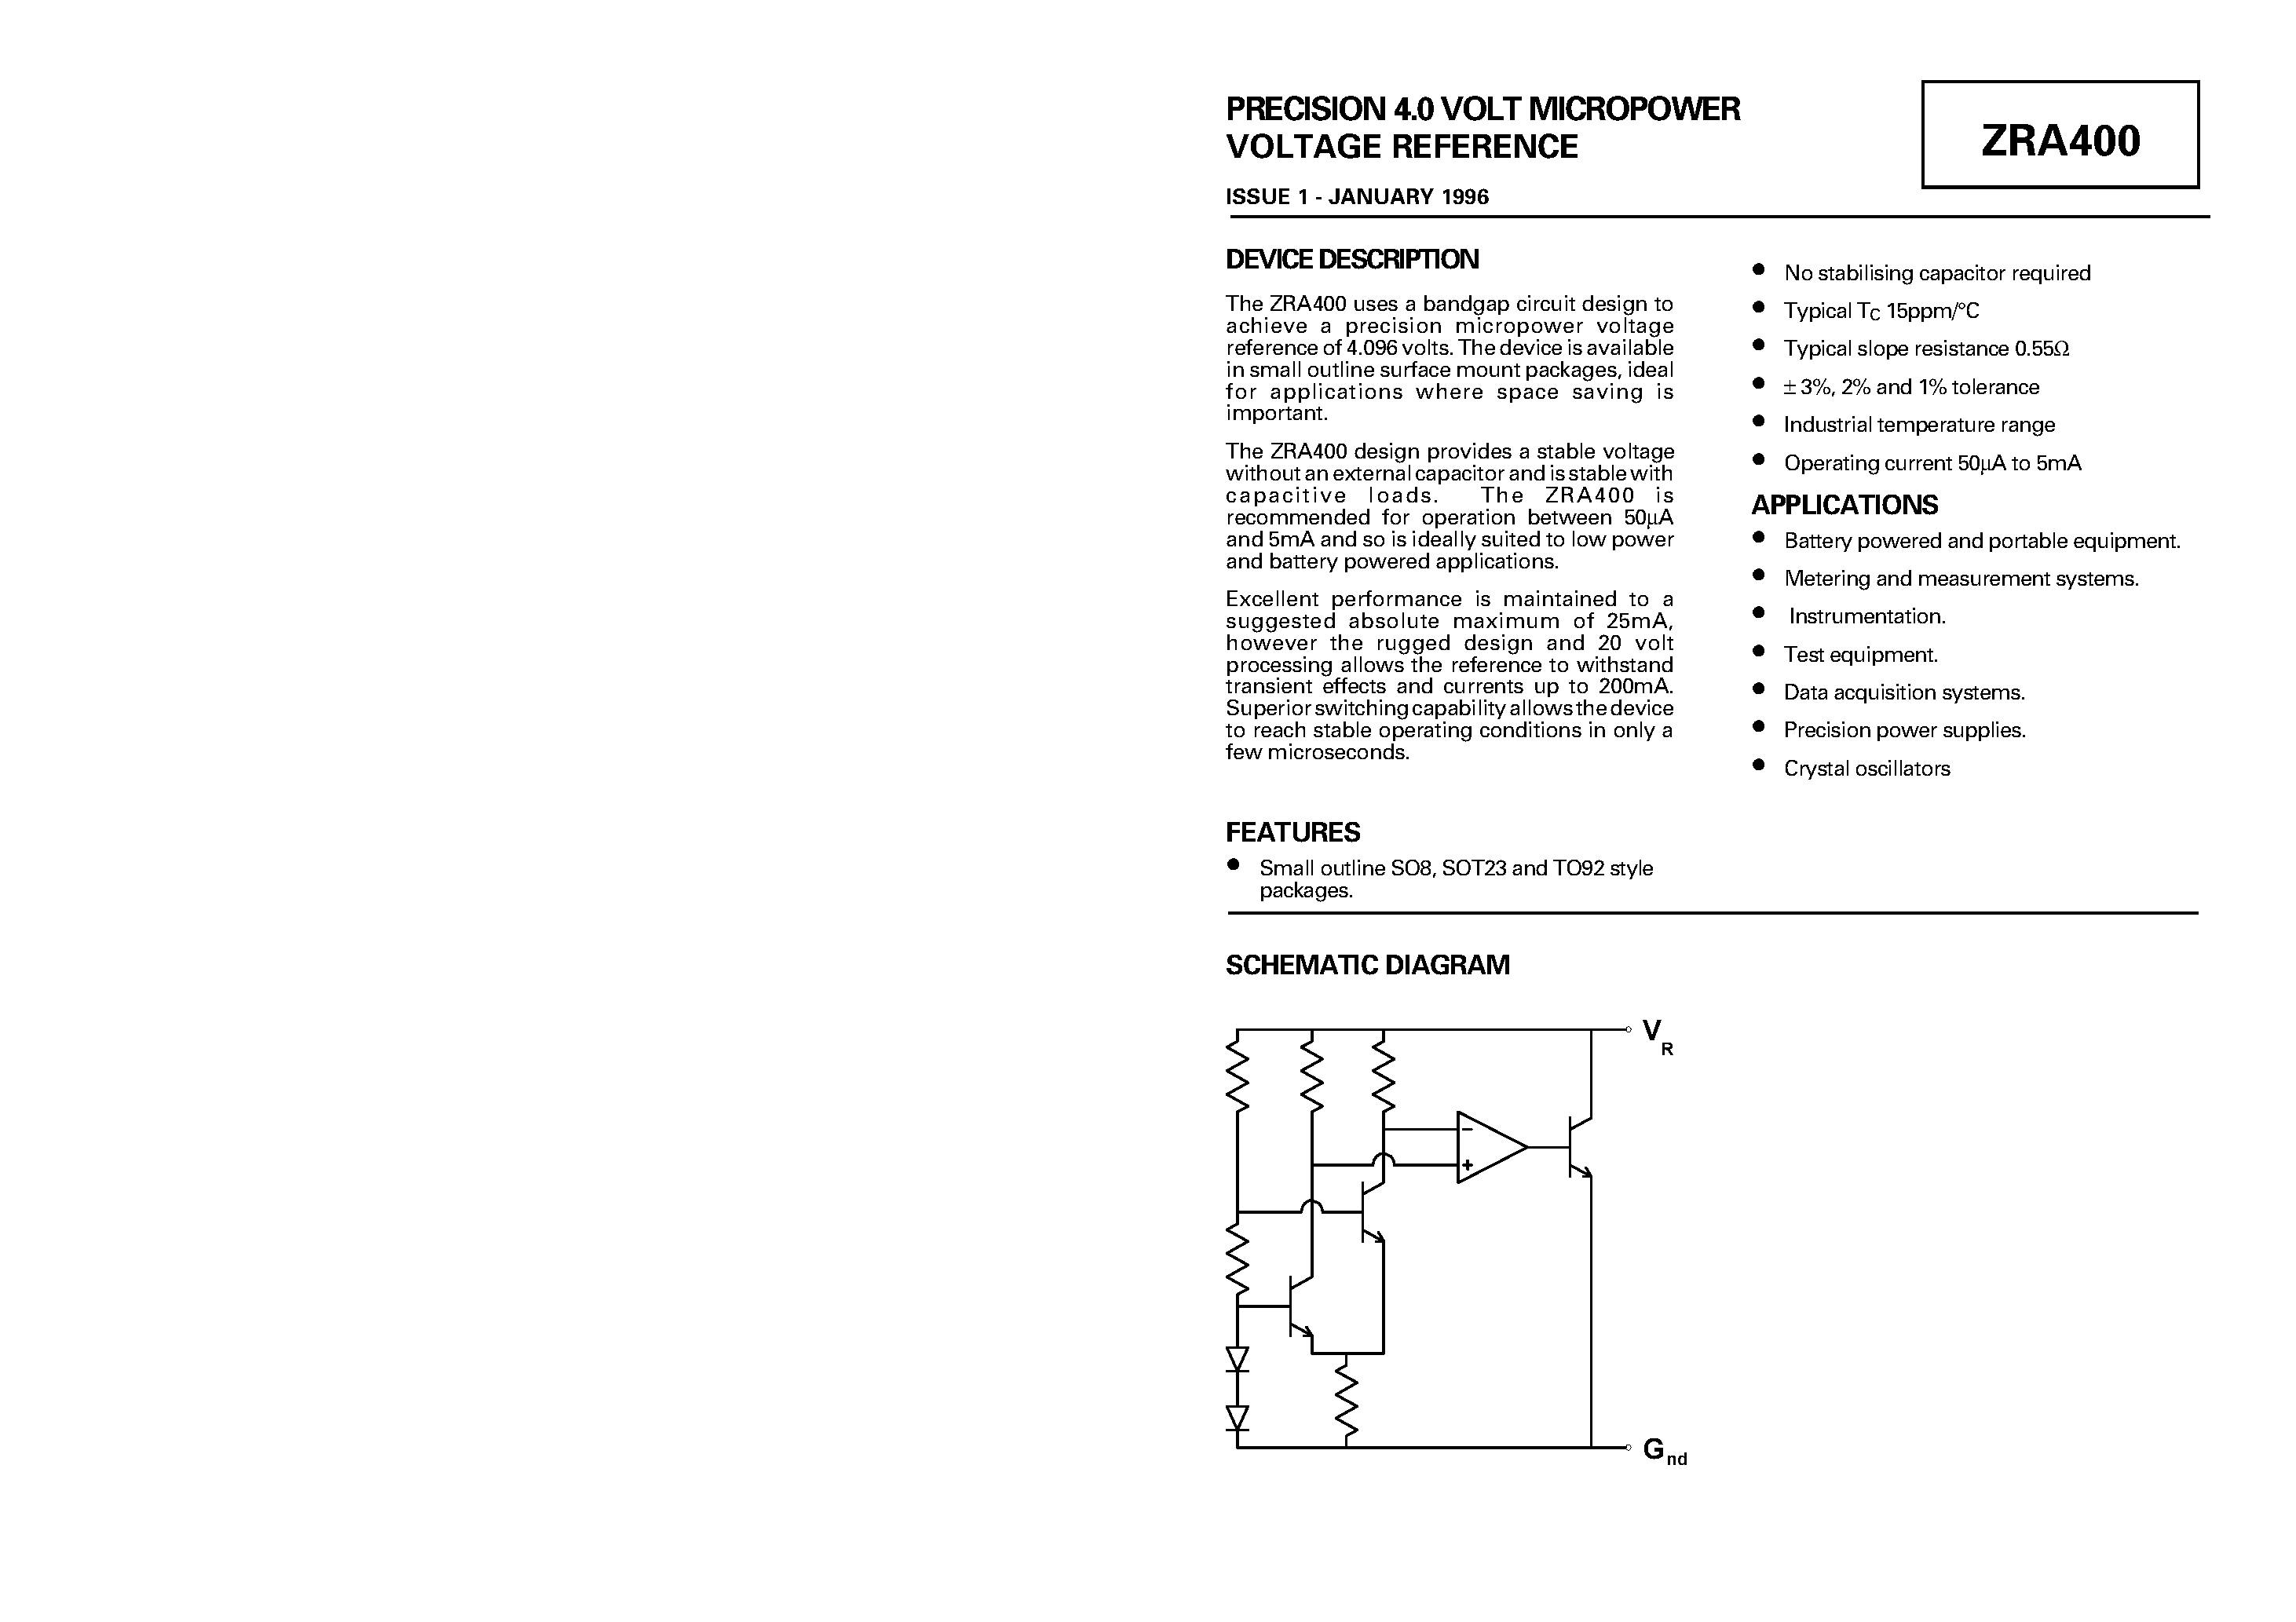 Datasheet ZRA400F01 - PRECISION 4.0 VOLT MICROPOWER page 1